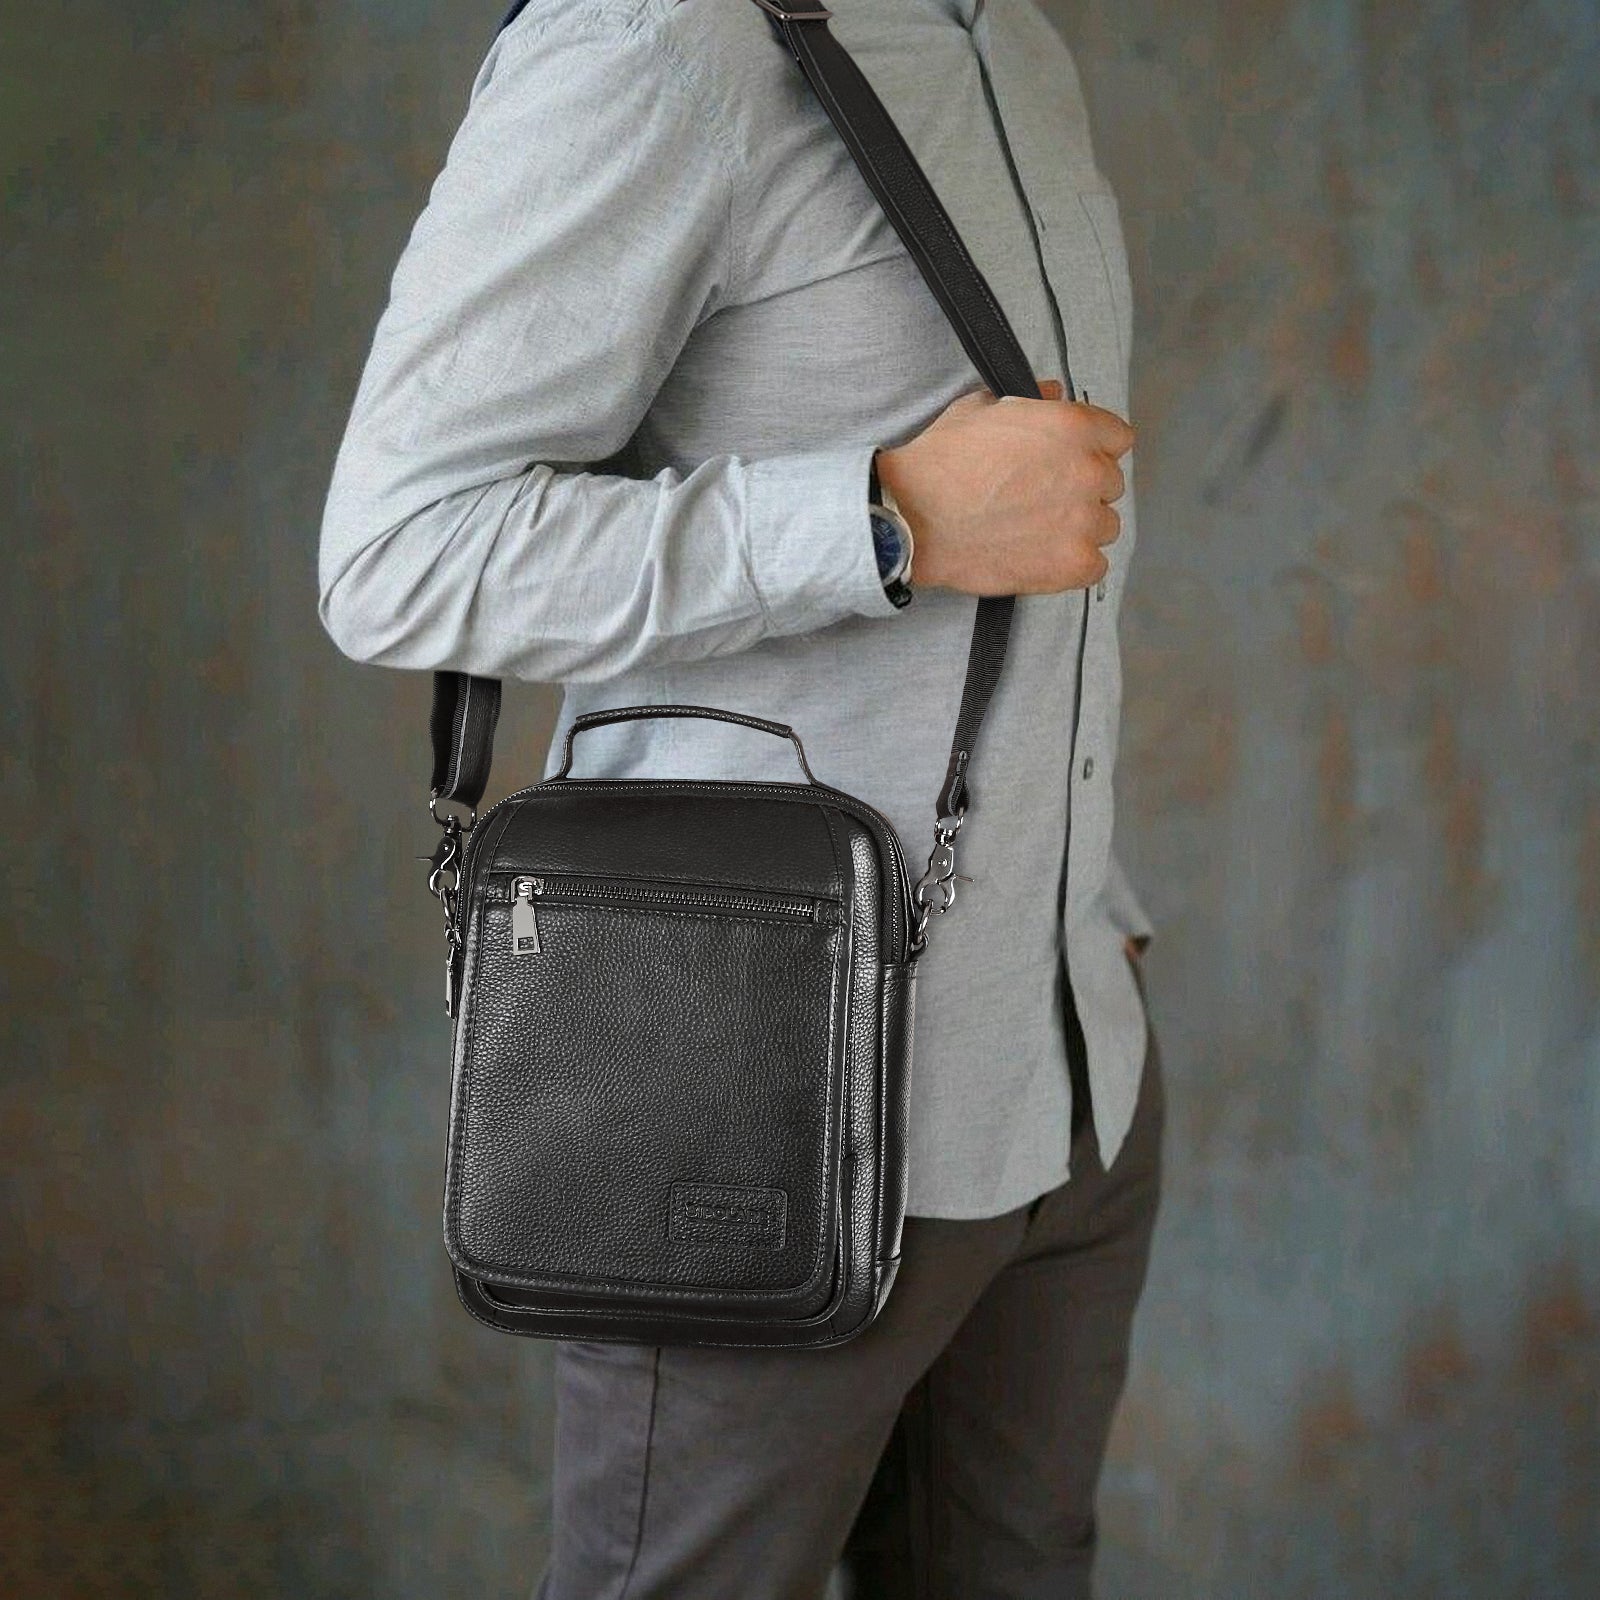 Italian Leather Messenger Bag Waterproof Travel Shoulder Bag (Model Display)